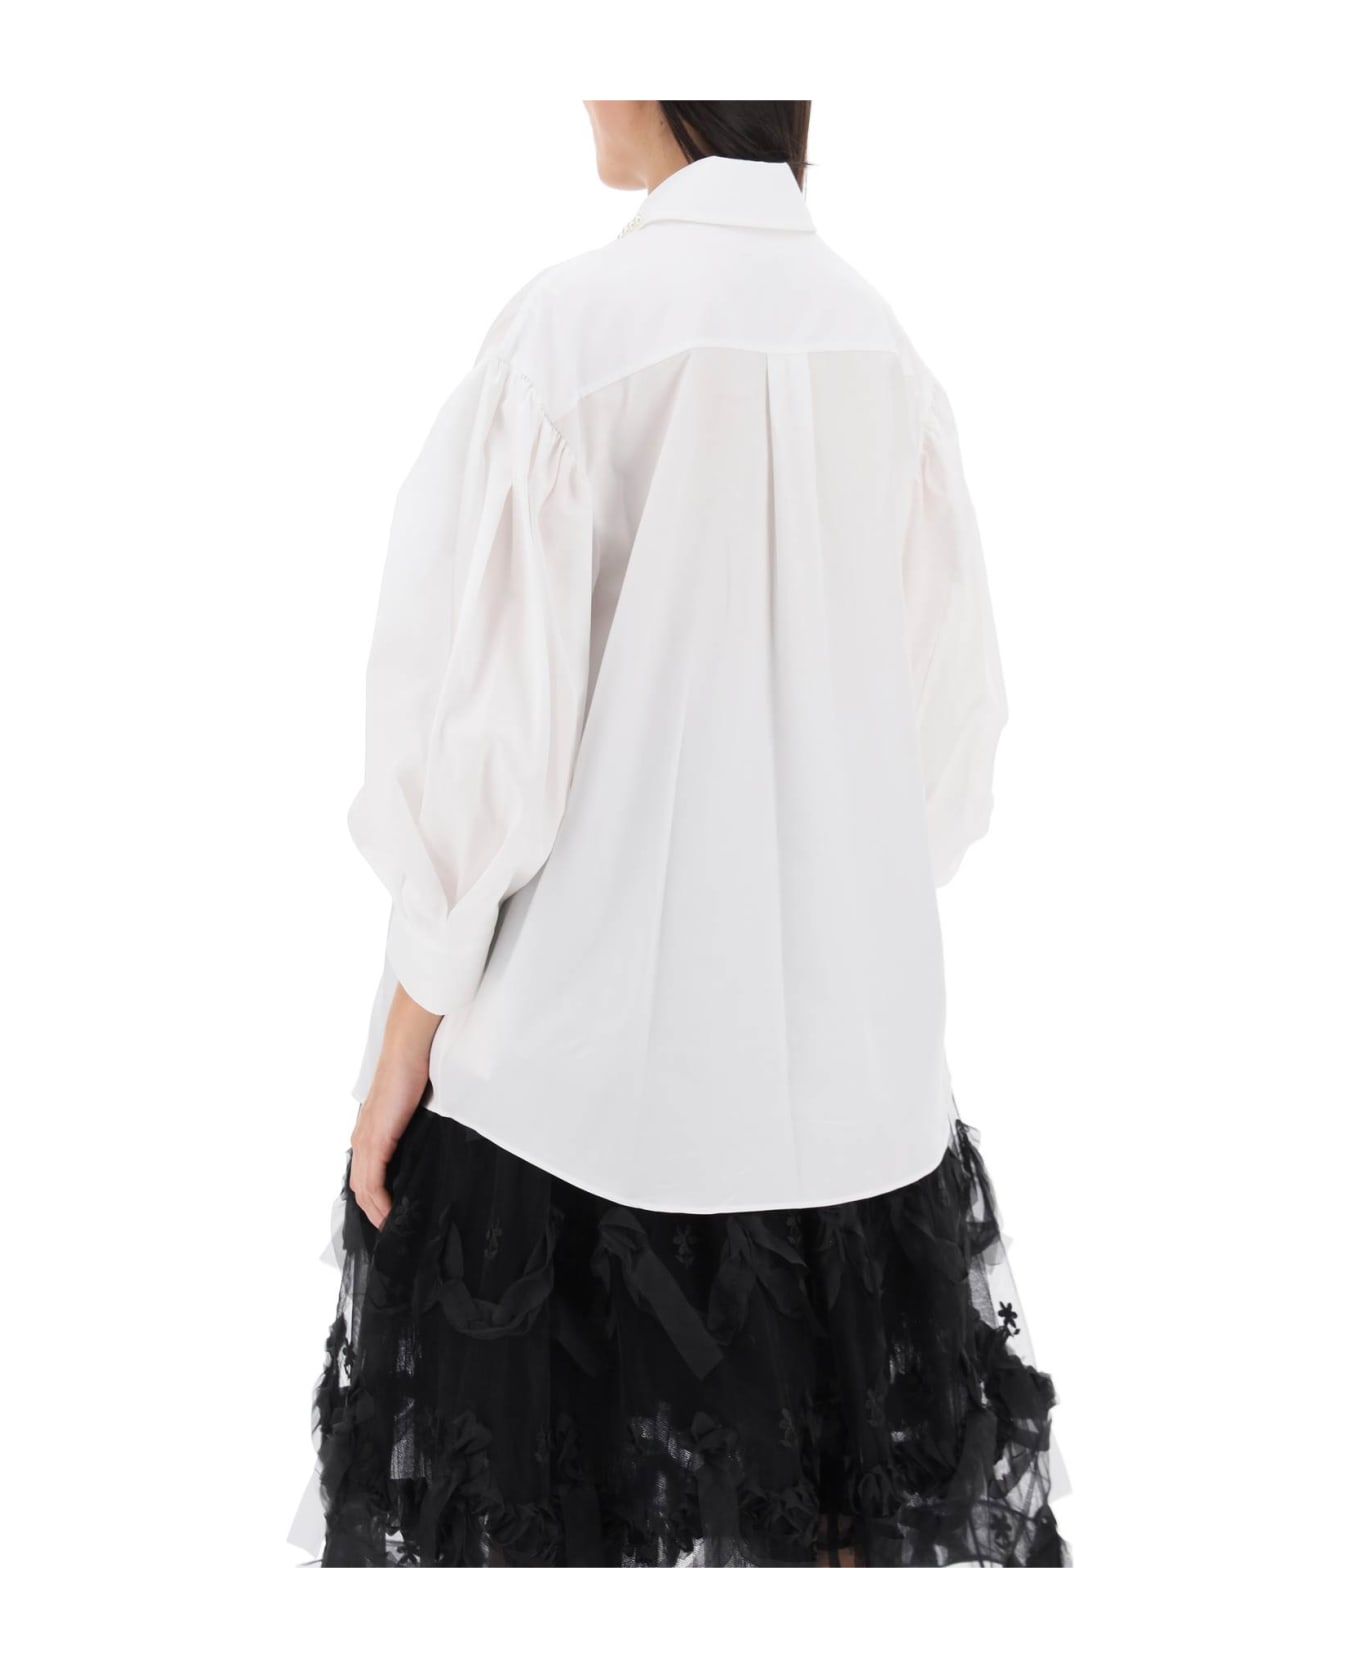 Simone Rocha Puff Sleeve Shirt With Embellishment - WHITE PEARL (White) シャツ